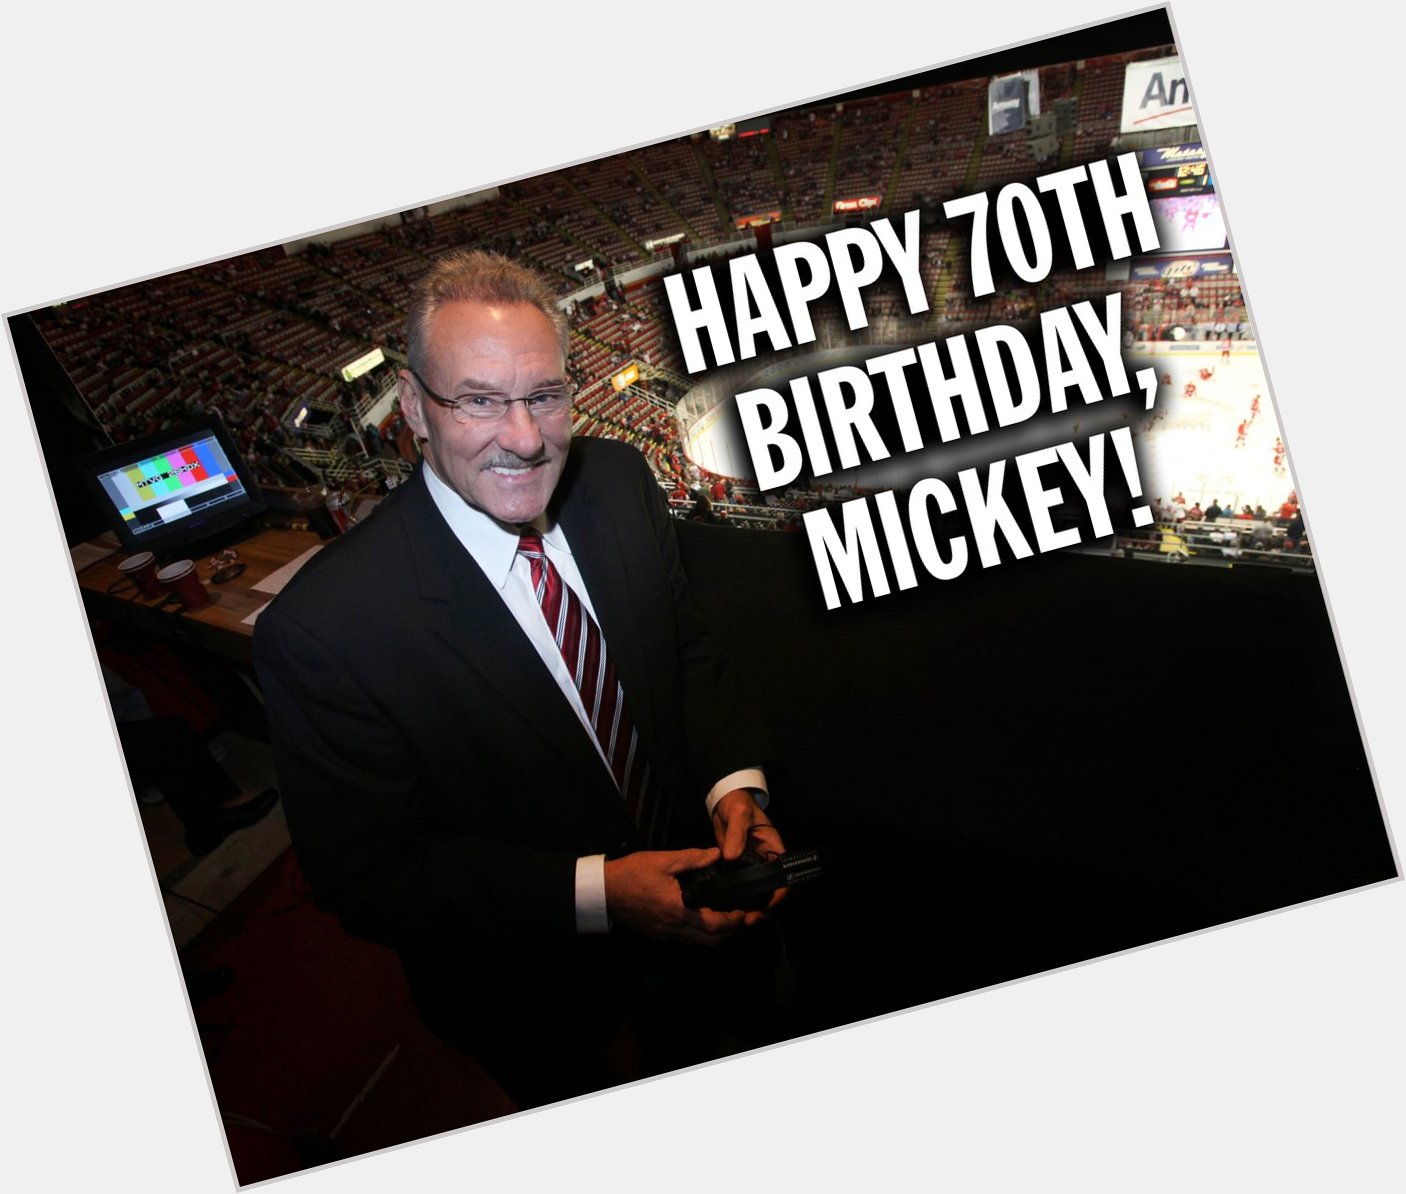 Bingo-Bango! Mickey Redmond is 70 today! Happy birthday to the announcer. 